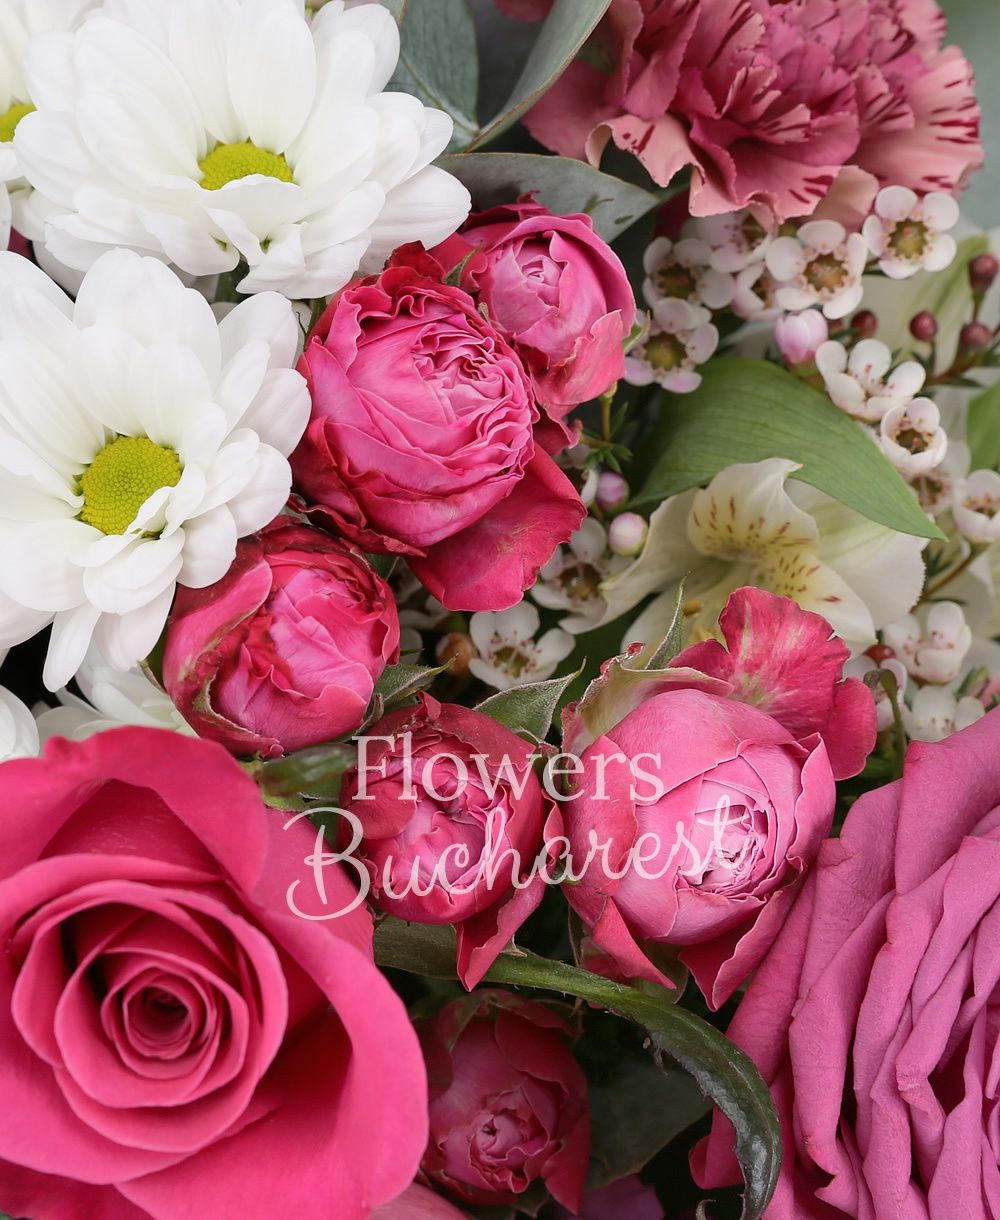 4 cyclam roses, 1 pink rose, 1 white chrysanthemum, 3 garnet carnations, 4 mauve matthiola, 1 cyclam minirose, 1 white alstroemeria, greenery